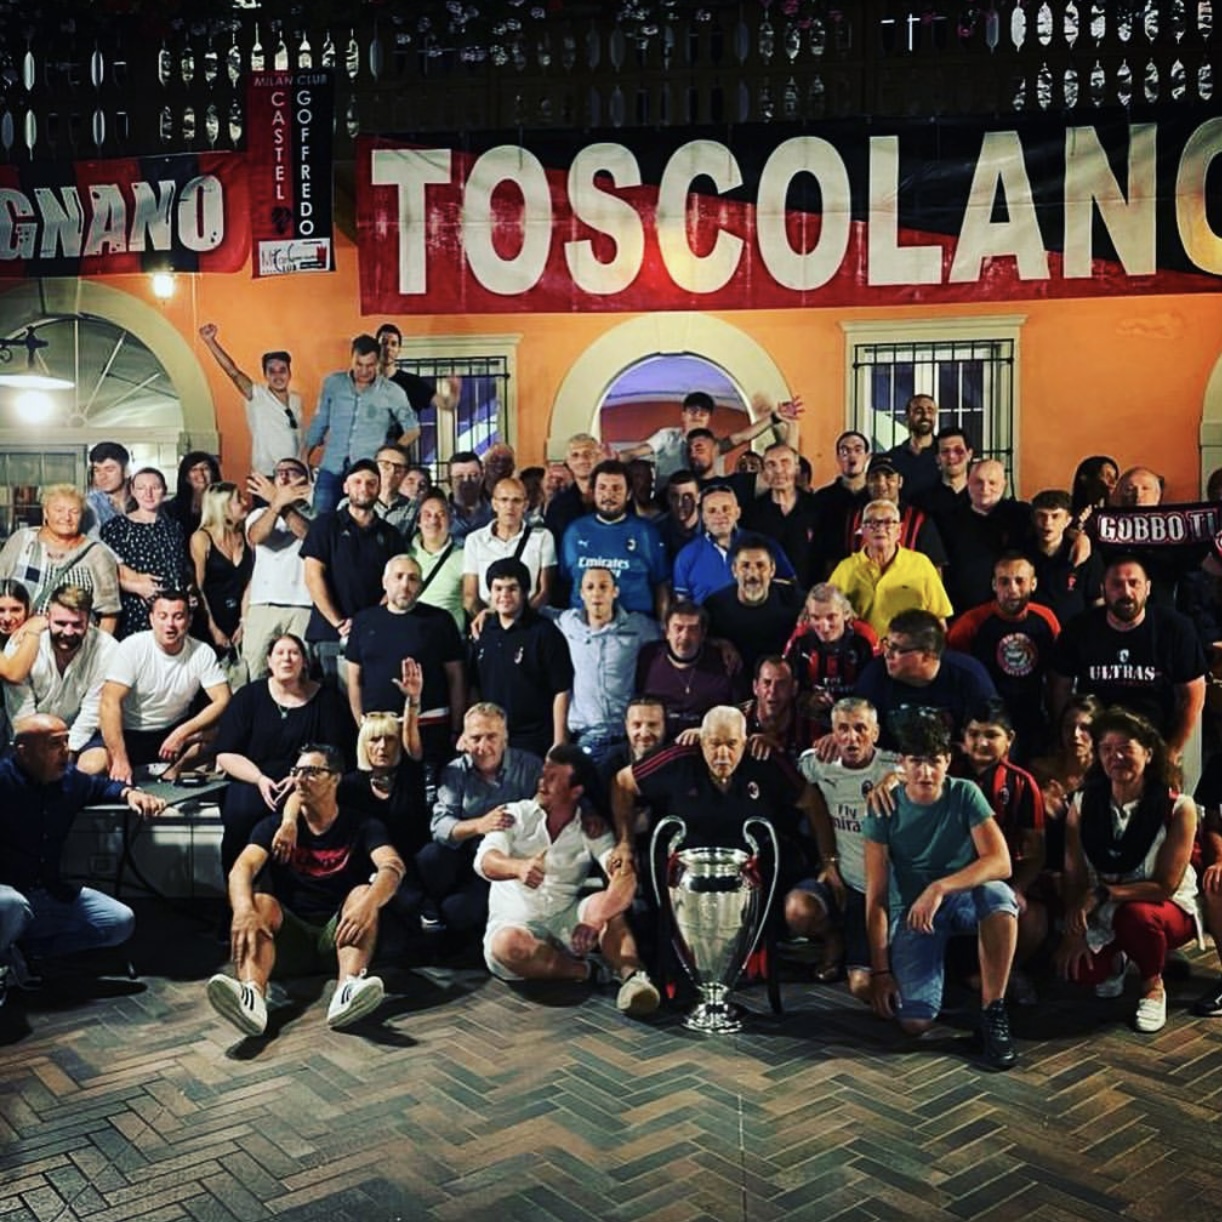 Milan Club in festa…. Toscolano Maderno